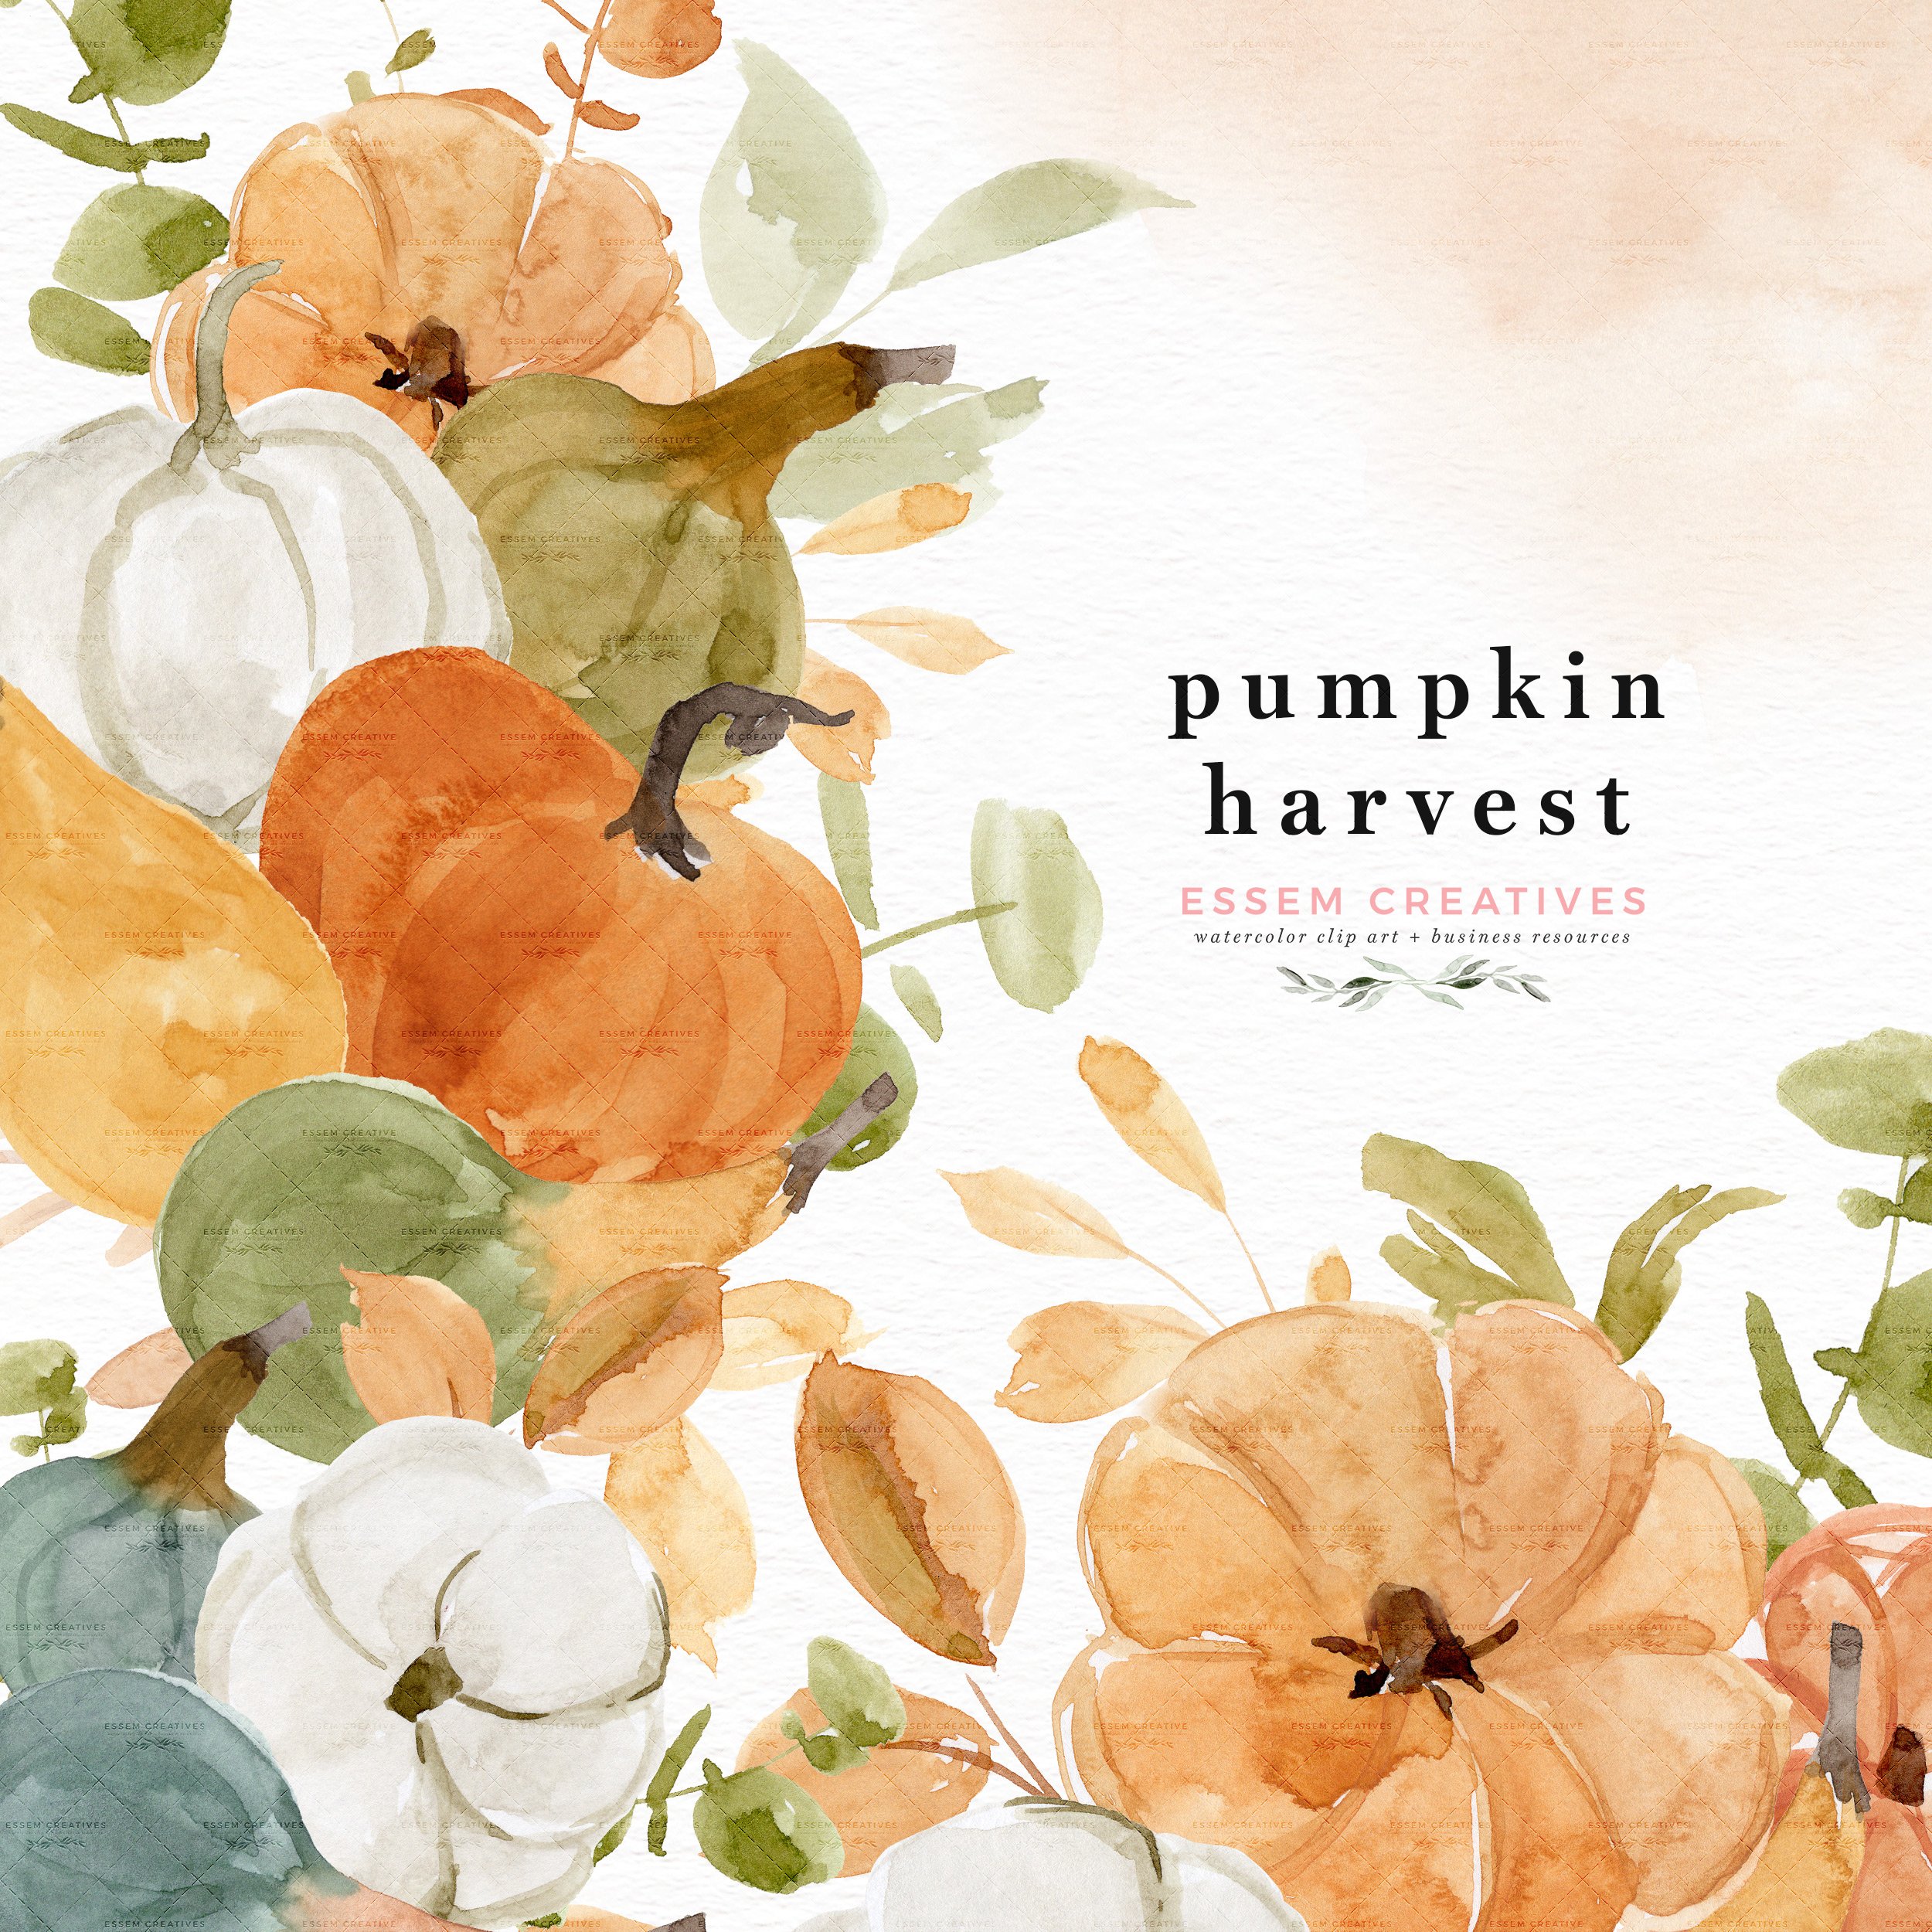 Watercolor pumpkin illustration in an autumn style.